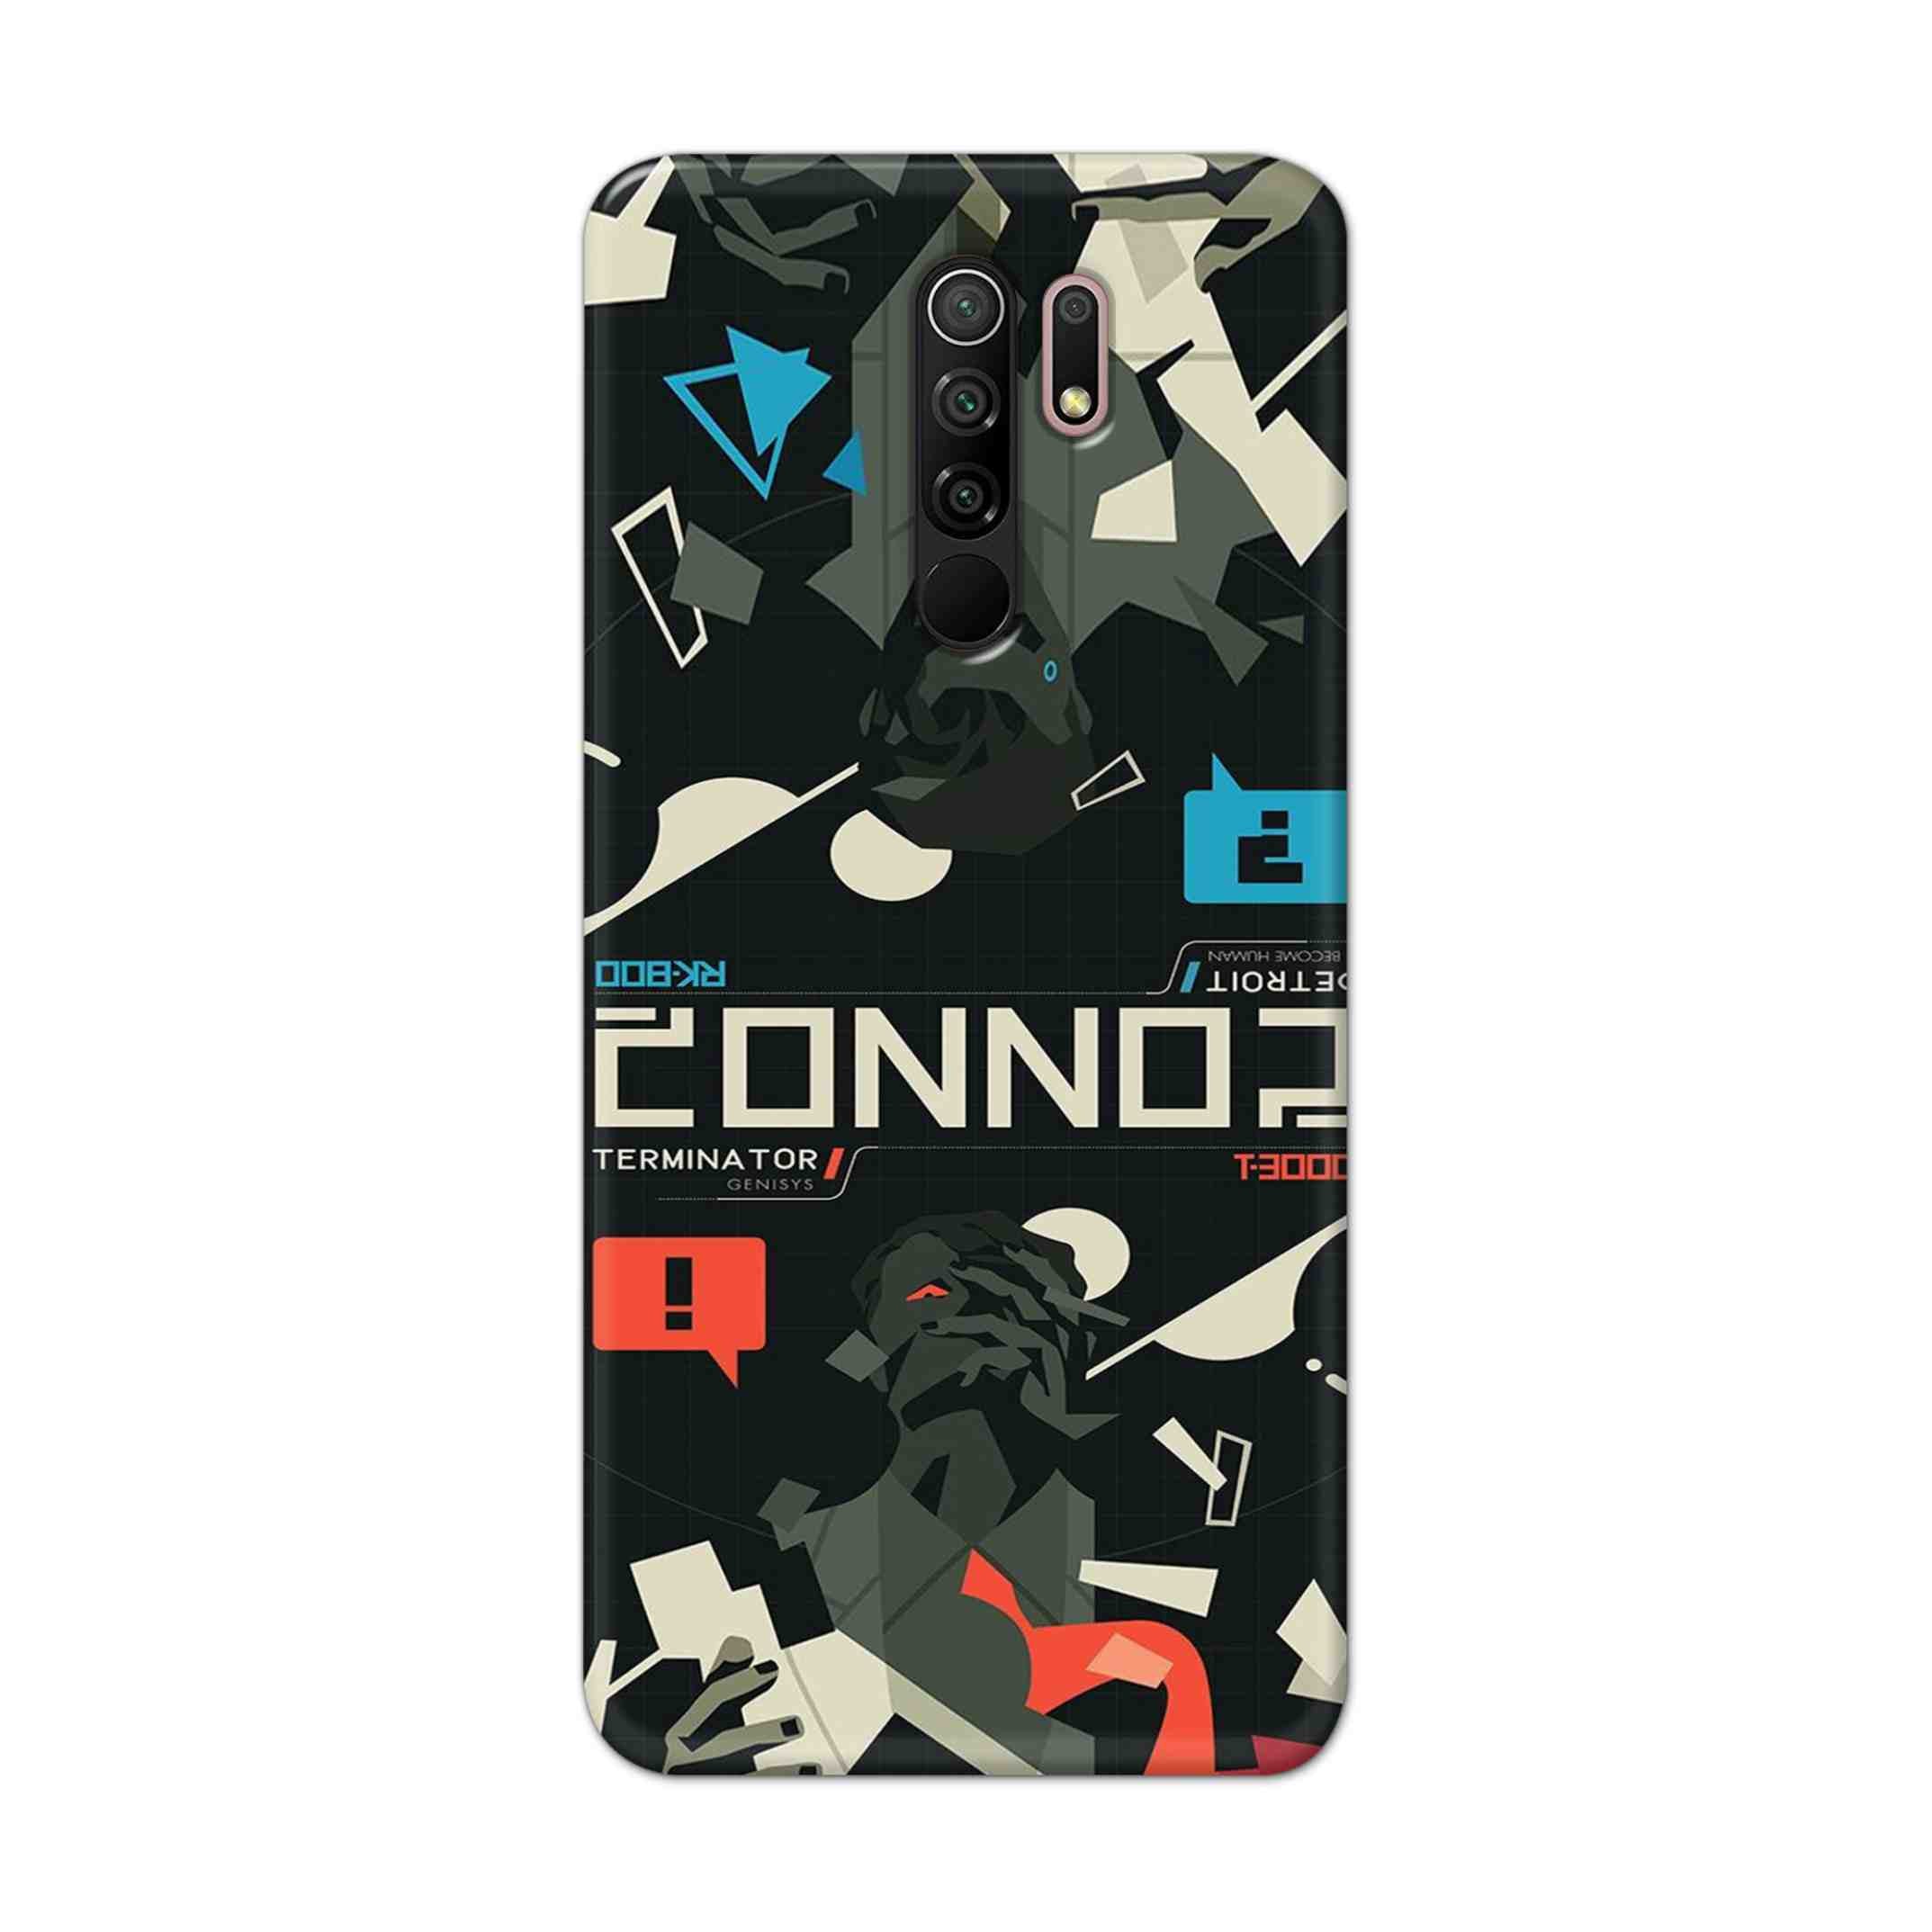 Buy Terminator Hard Back Mobile Phone Case Cover For Xiaomi Redmi 9 Prime Online